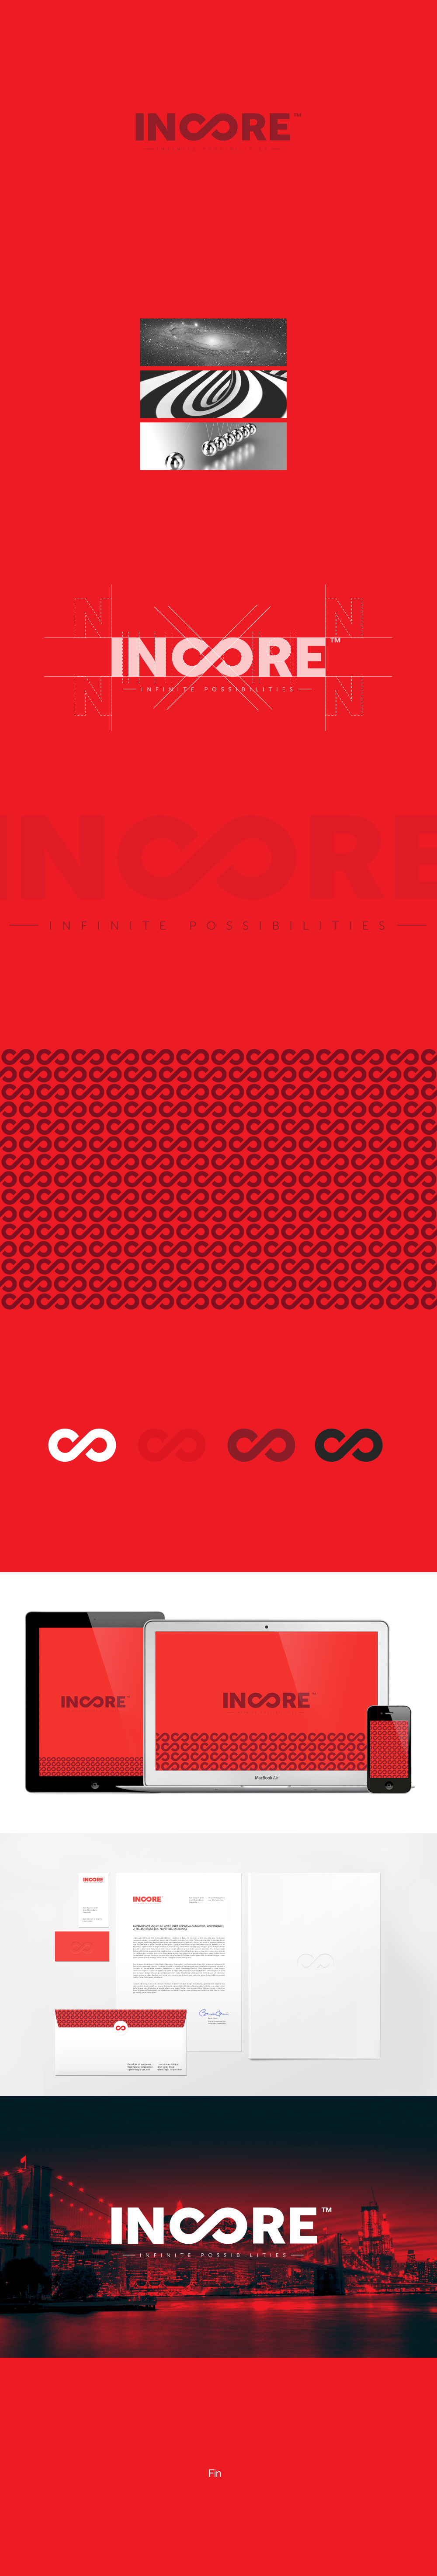 typo font custom typo Webdesign identity corporate Logotype logo infinity